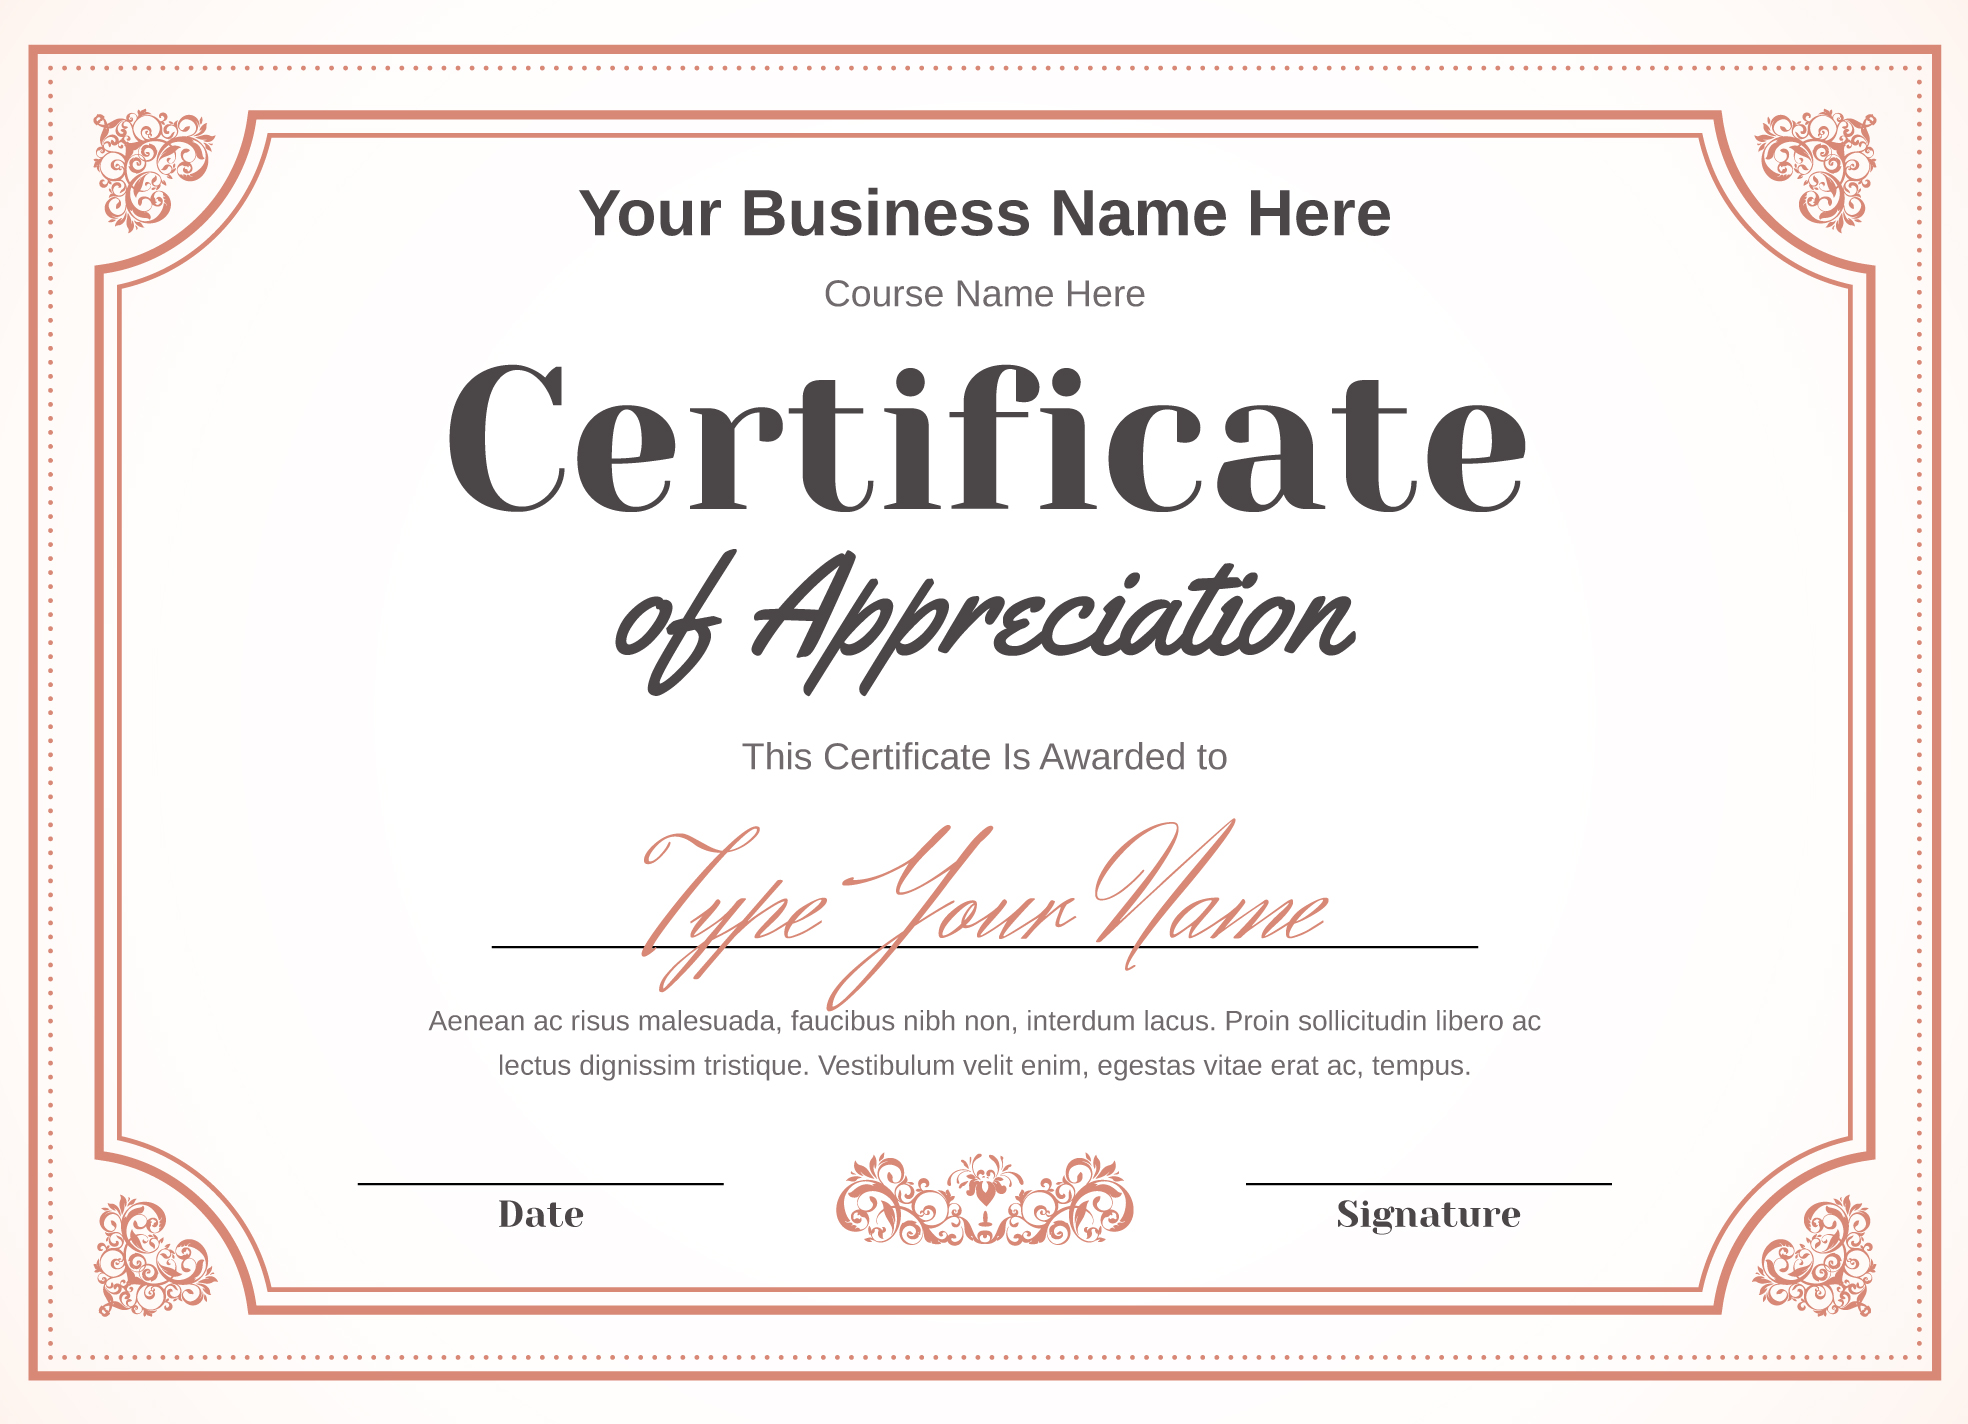 certificate of appreciation template for guest speaker